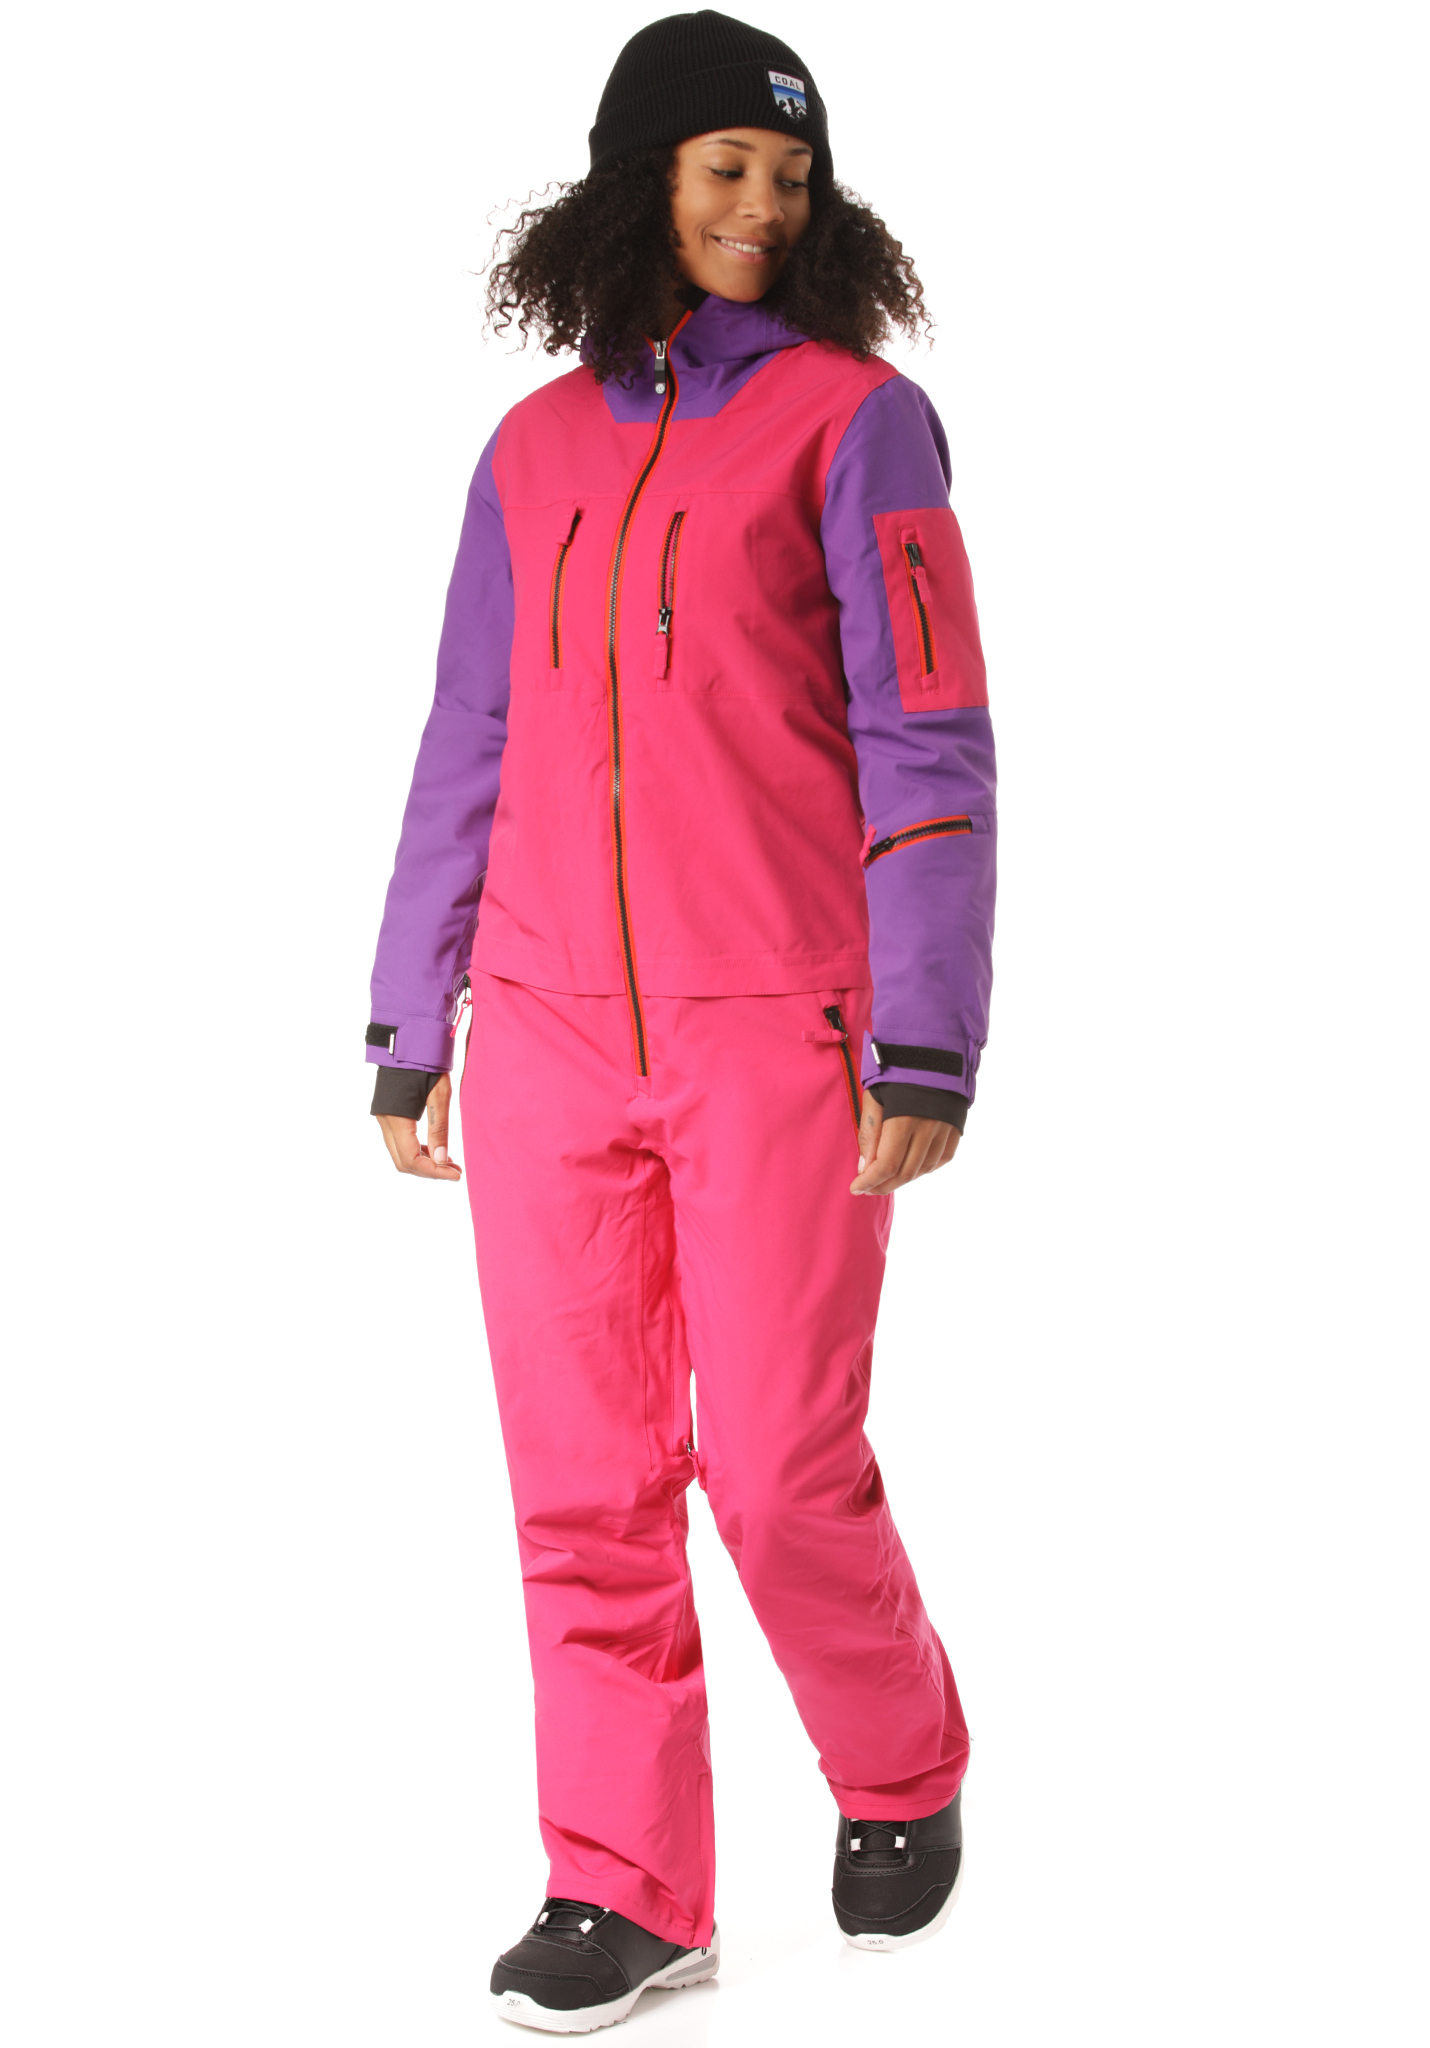 LIGHT Dolores Snowboardbekleidung pink/purple L